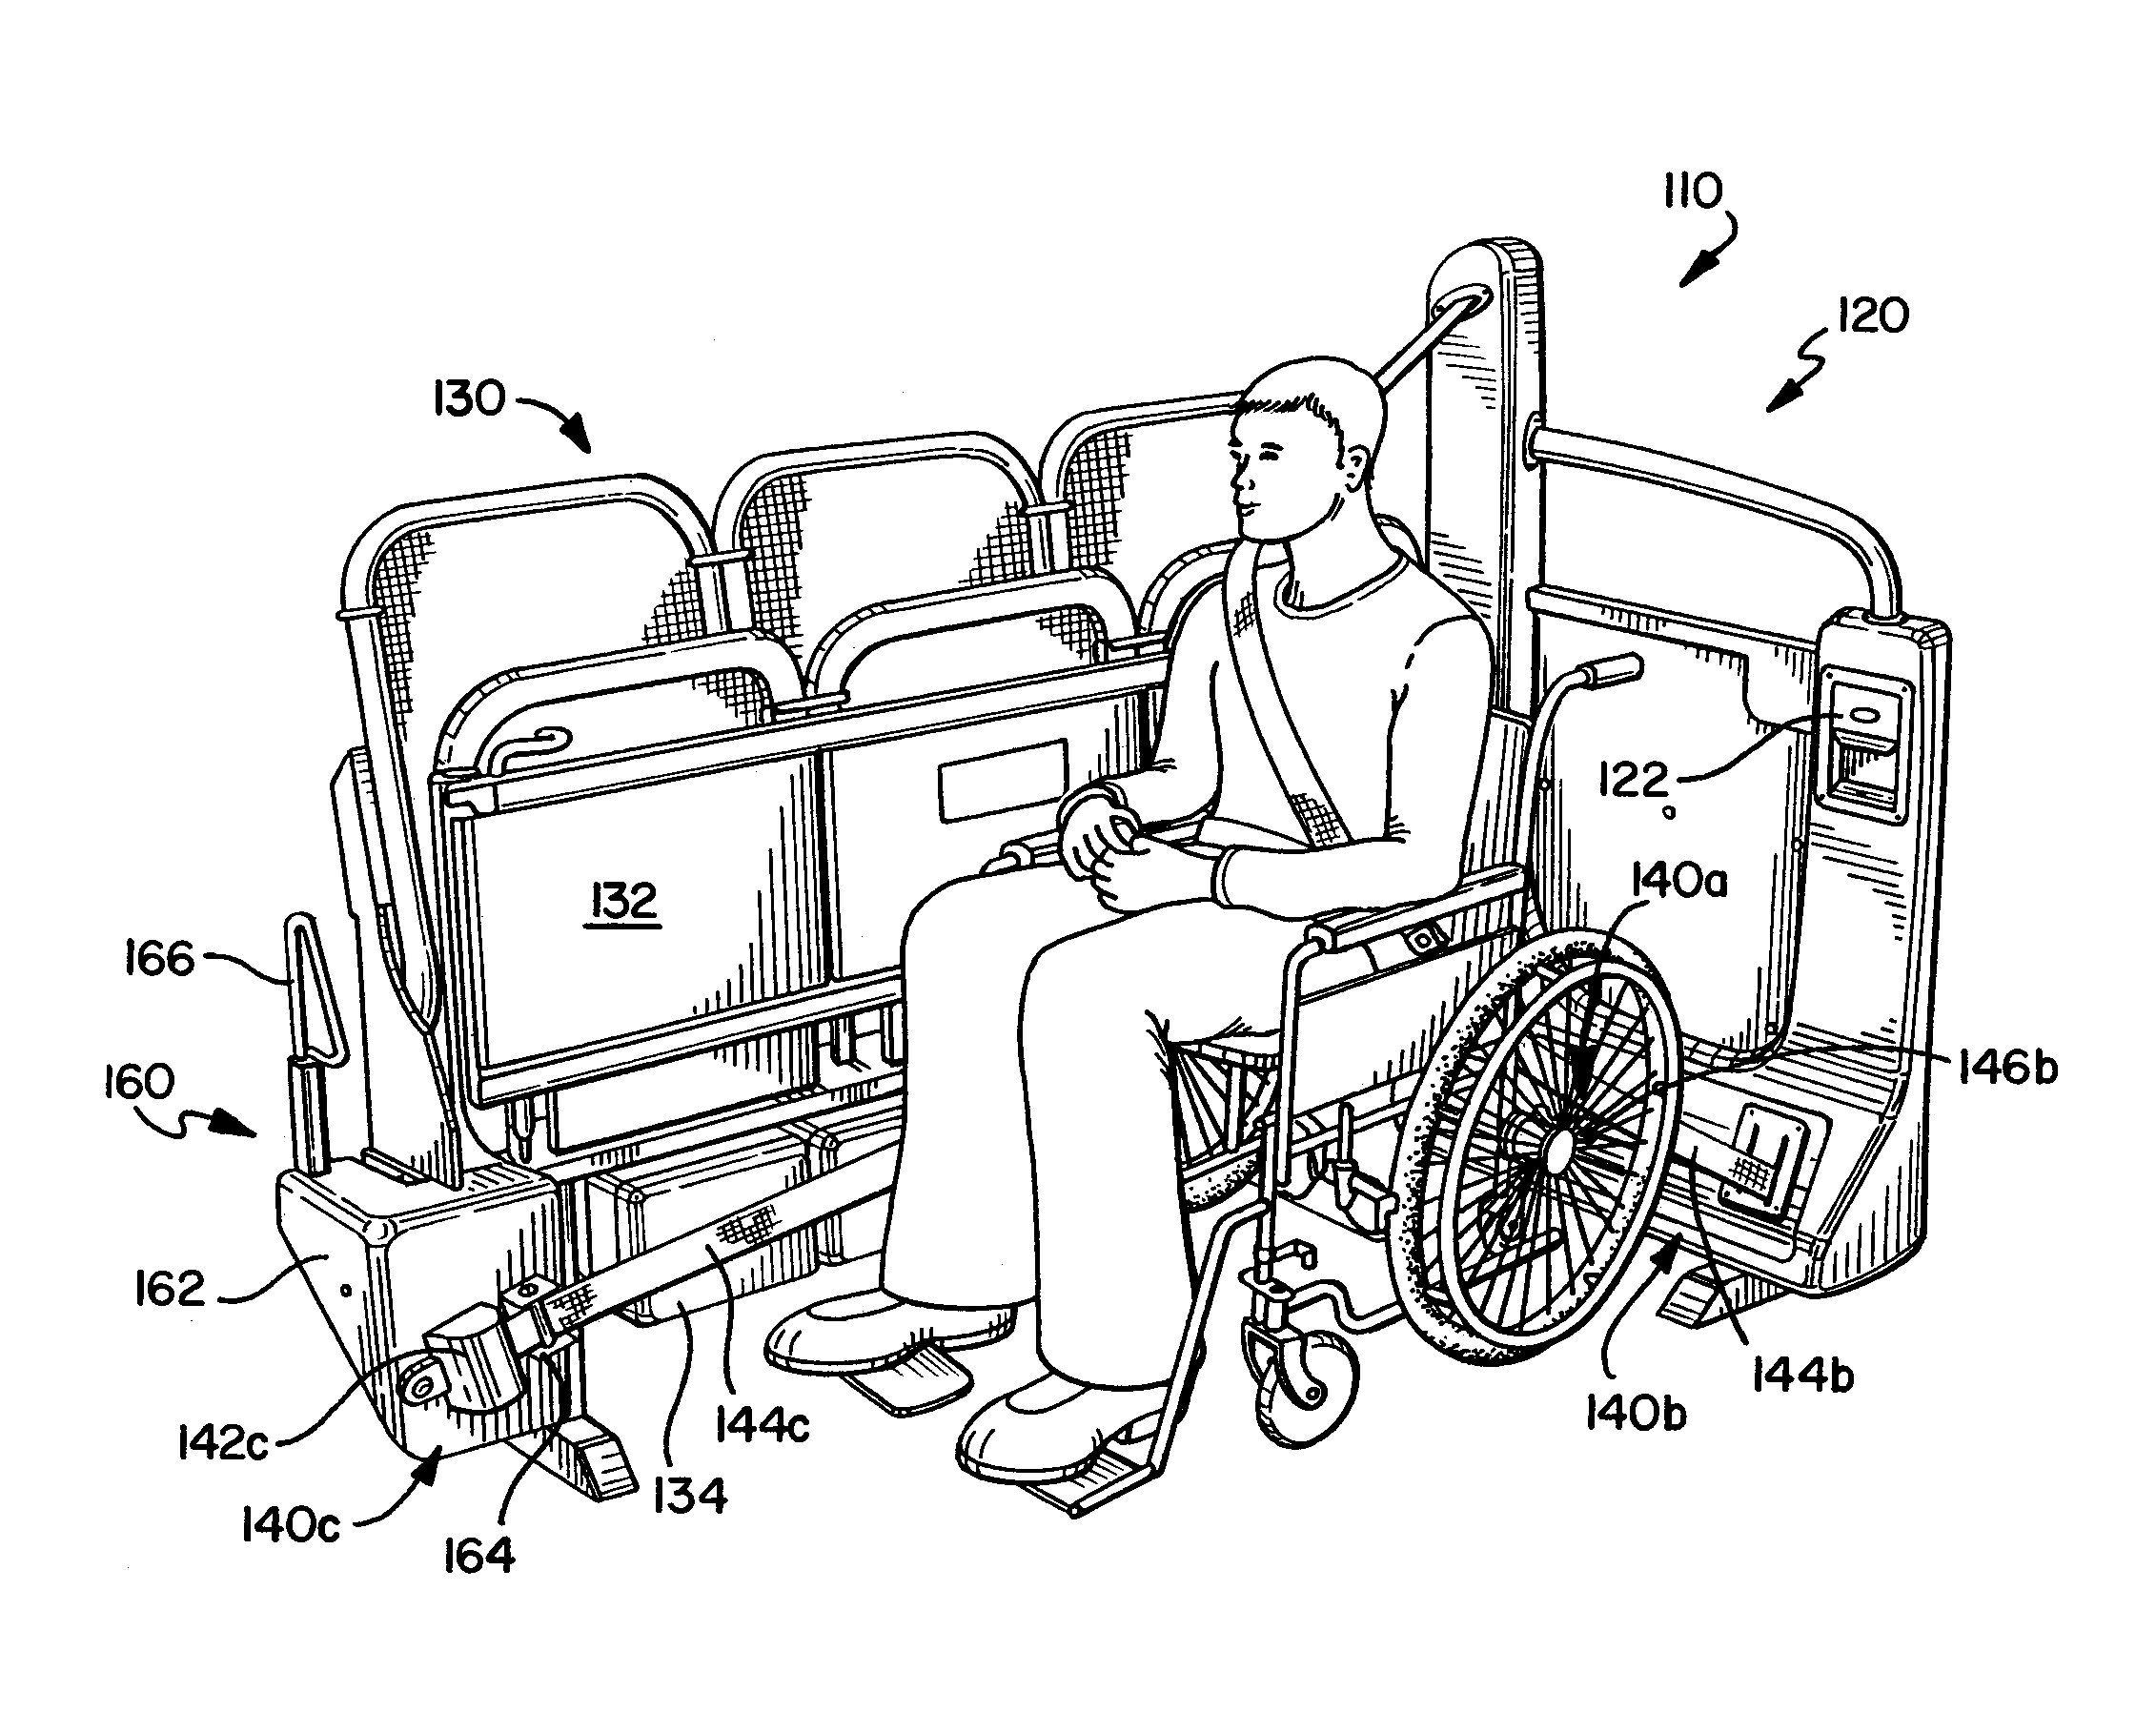 3-Point Wheelchair Passenger Securement system